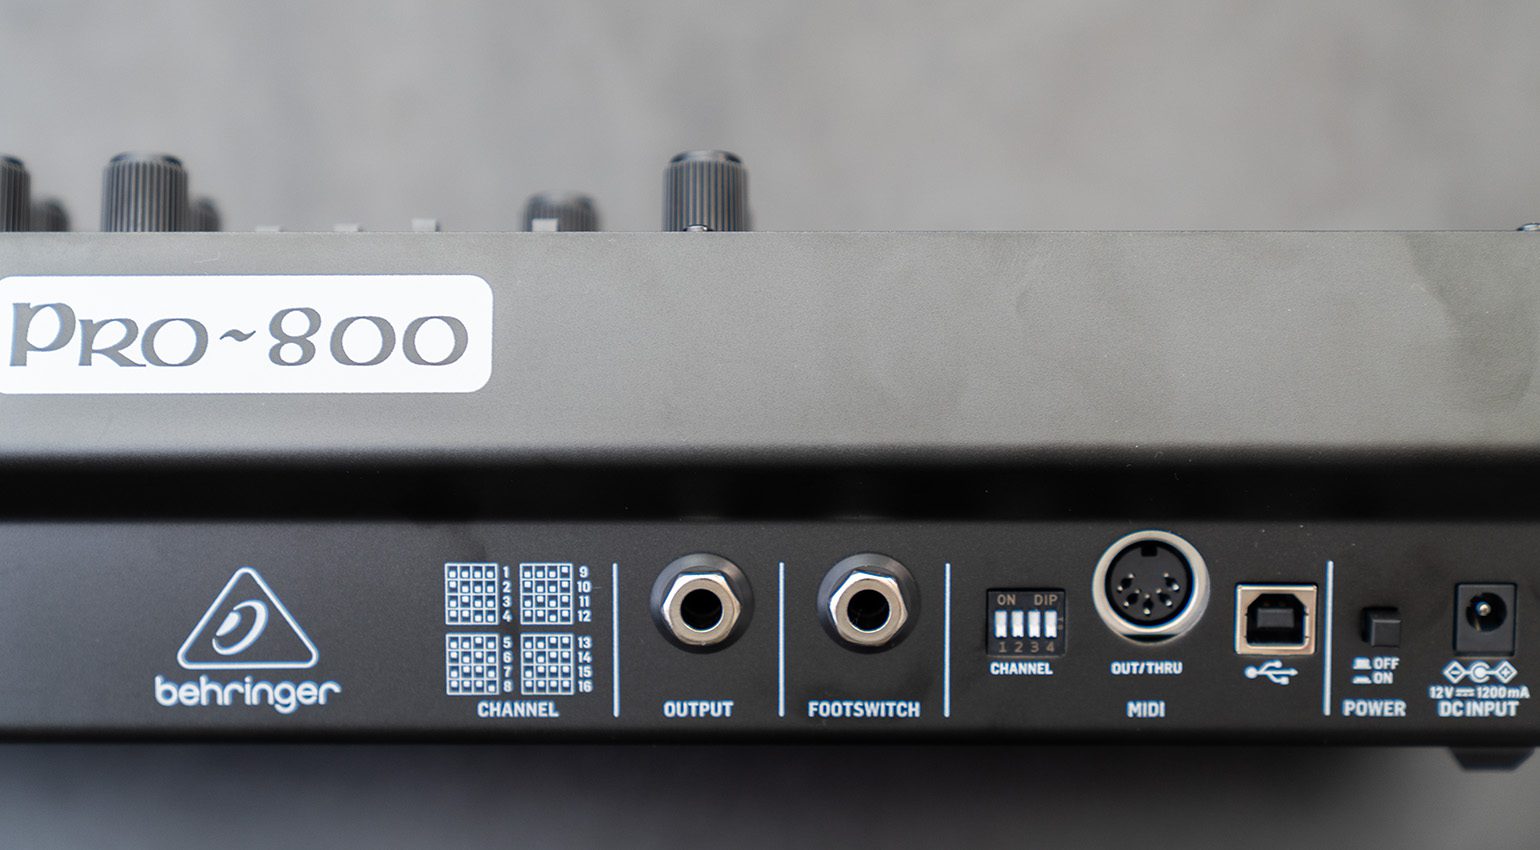 Pro-800's connectivity